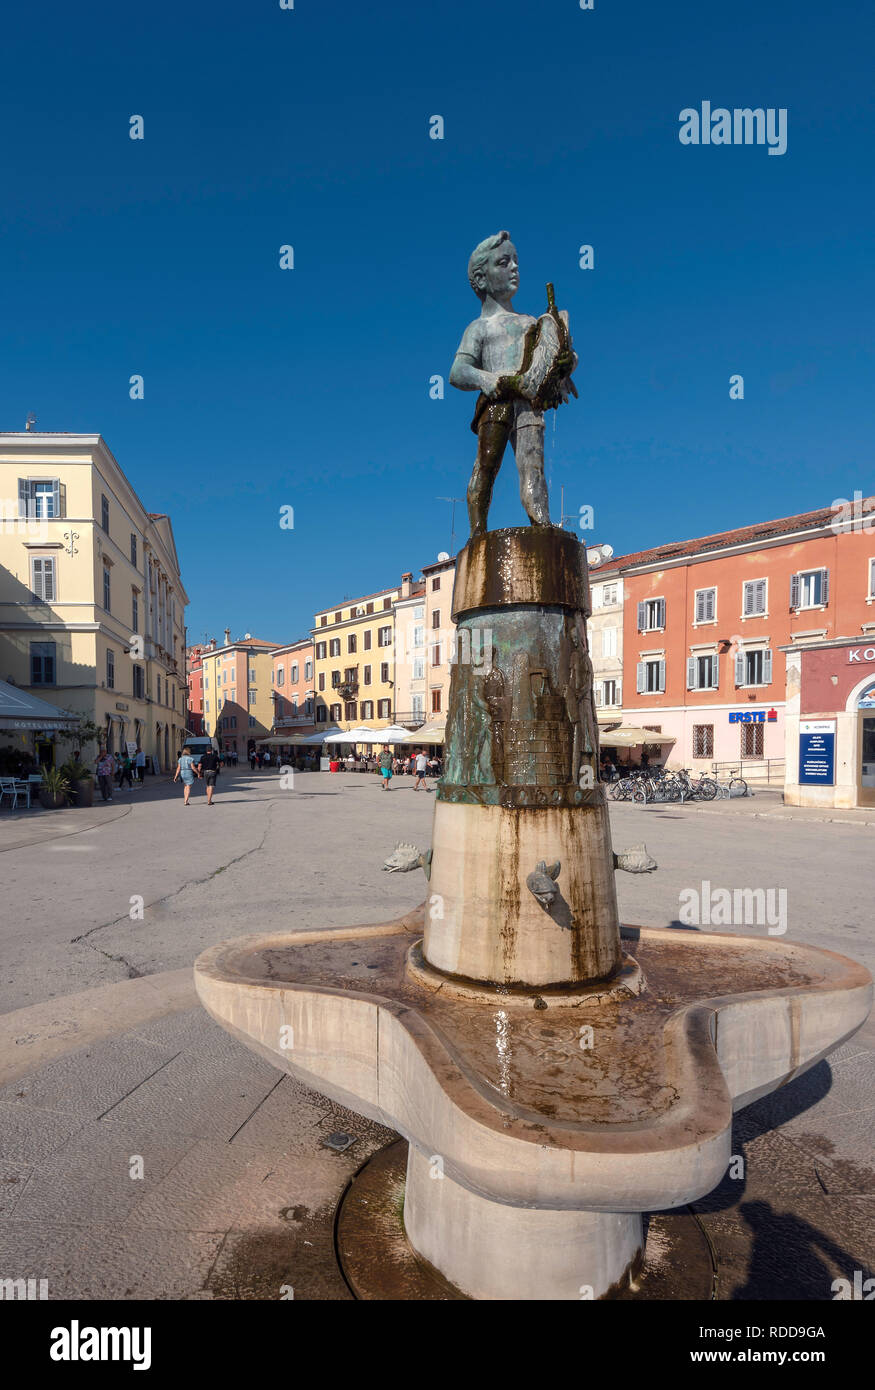 Fountain with statue of boy with fish, Rovinj, Croatia Stock Photo